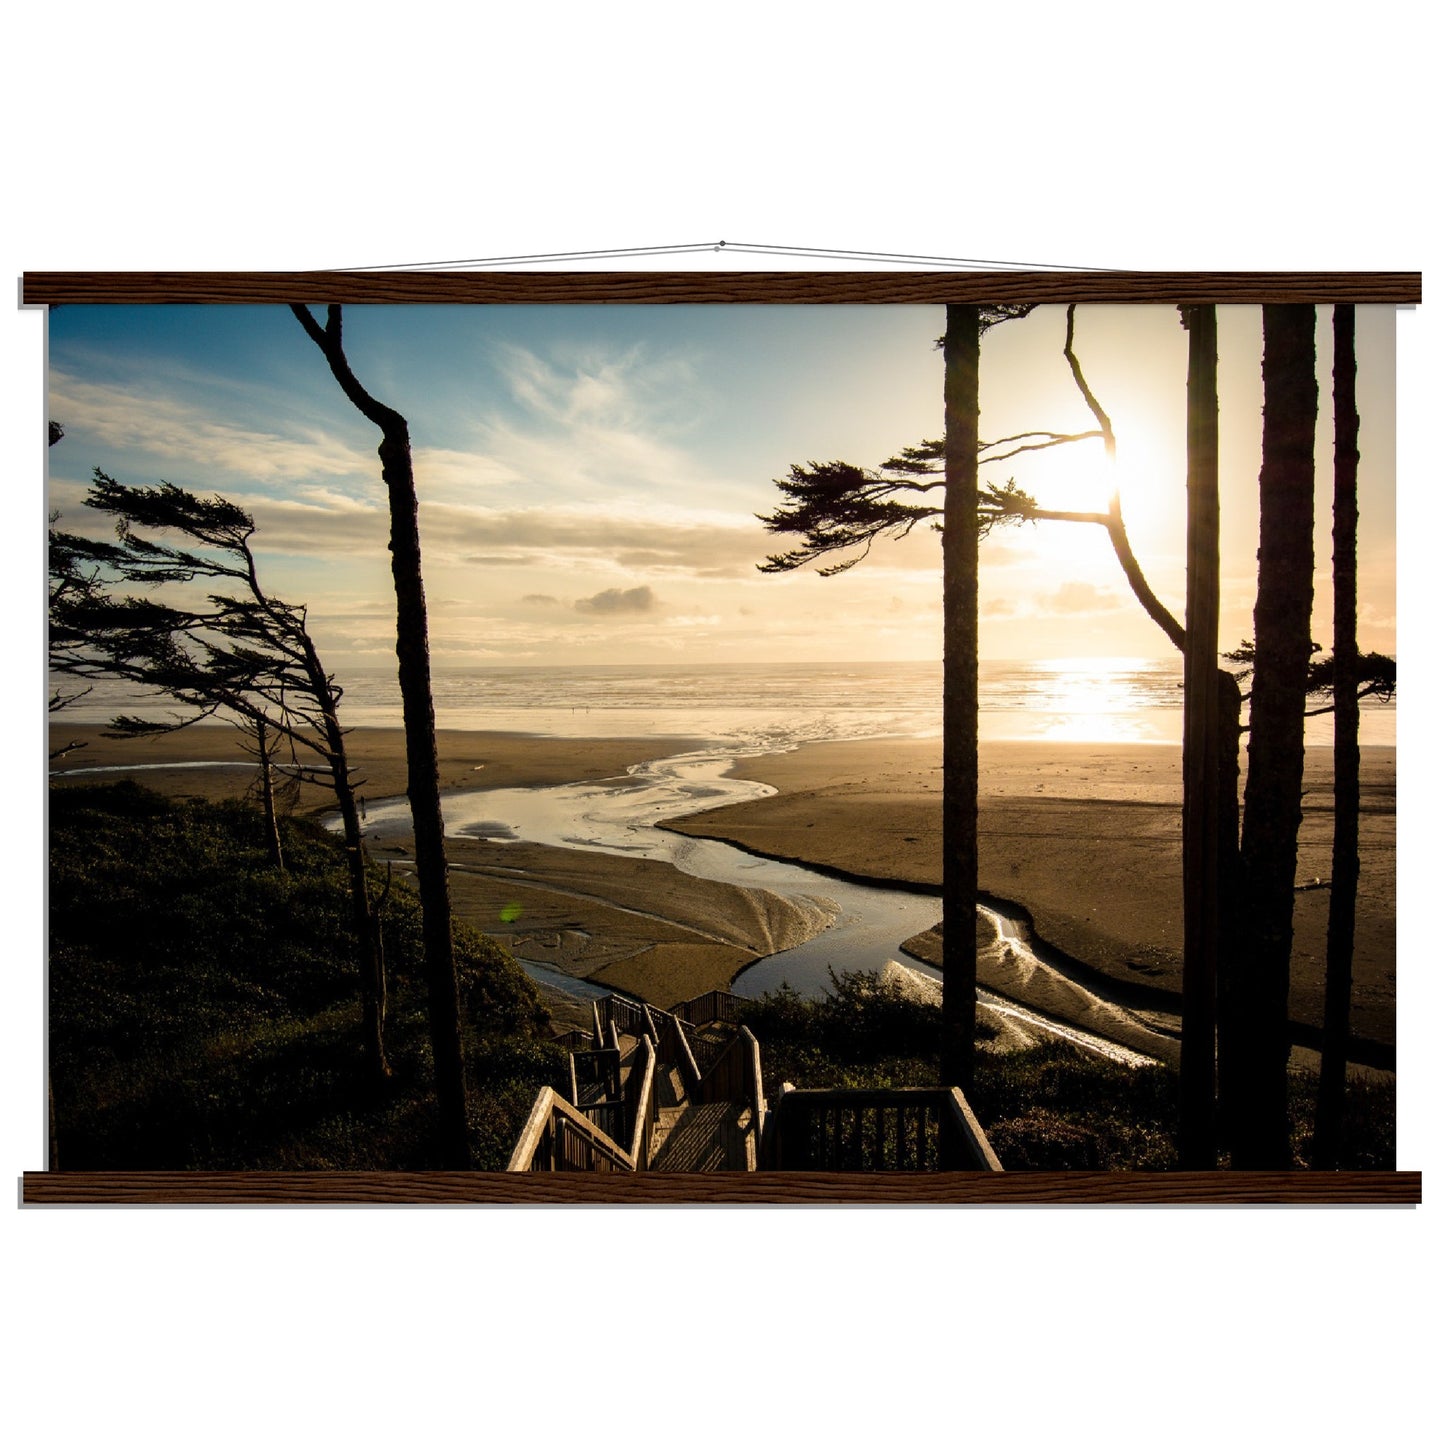 Coastal Sunset Art Print on Premium Semi-Glossy Paper Poster with Hanger